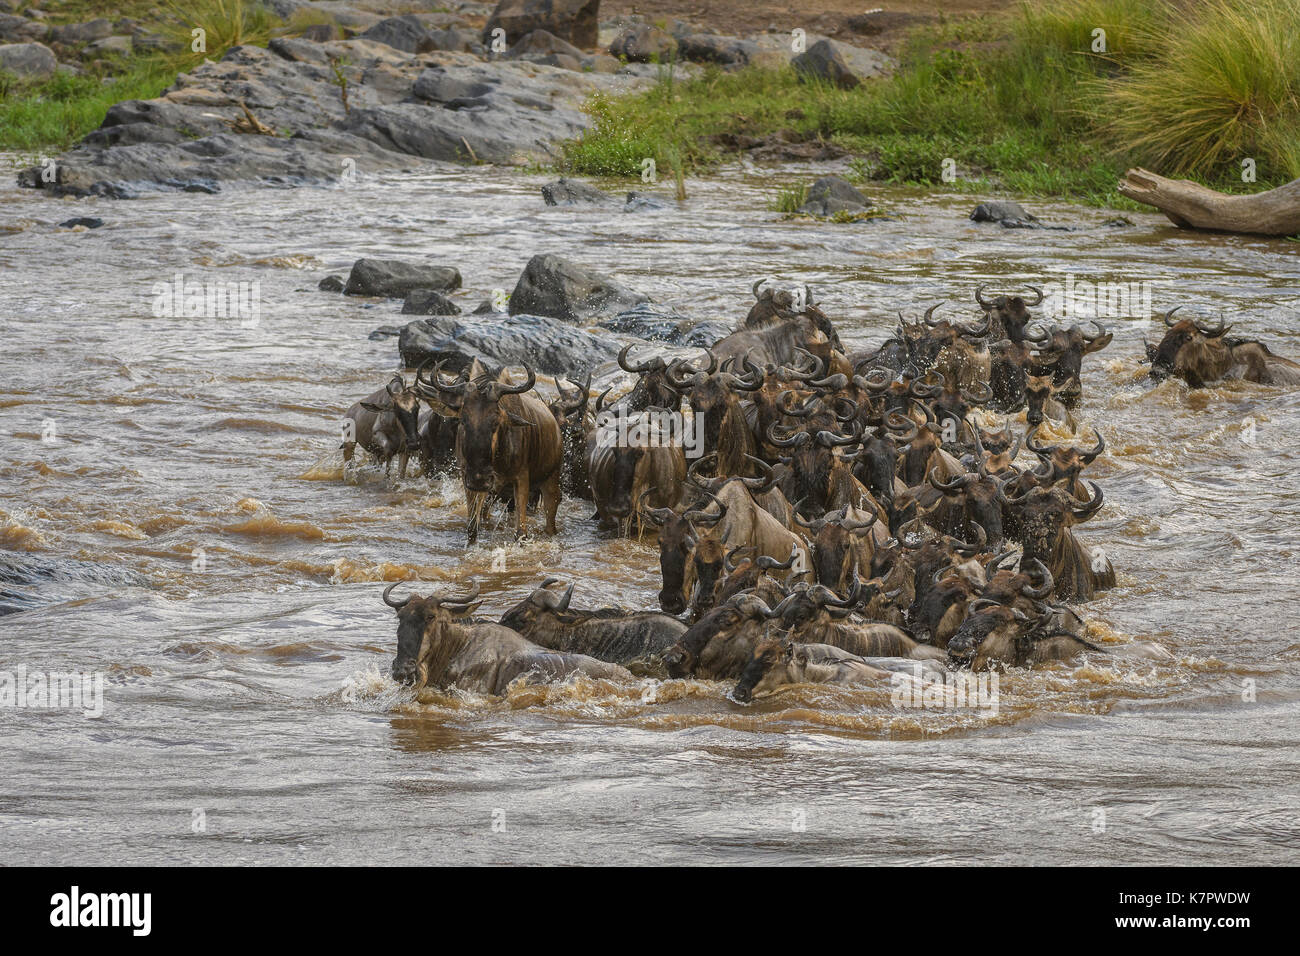 Wildebeest crossing a river in the Masai Mara, Kenya Stock Photo